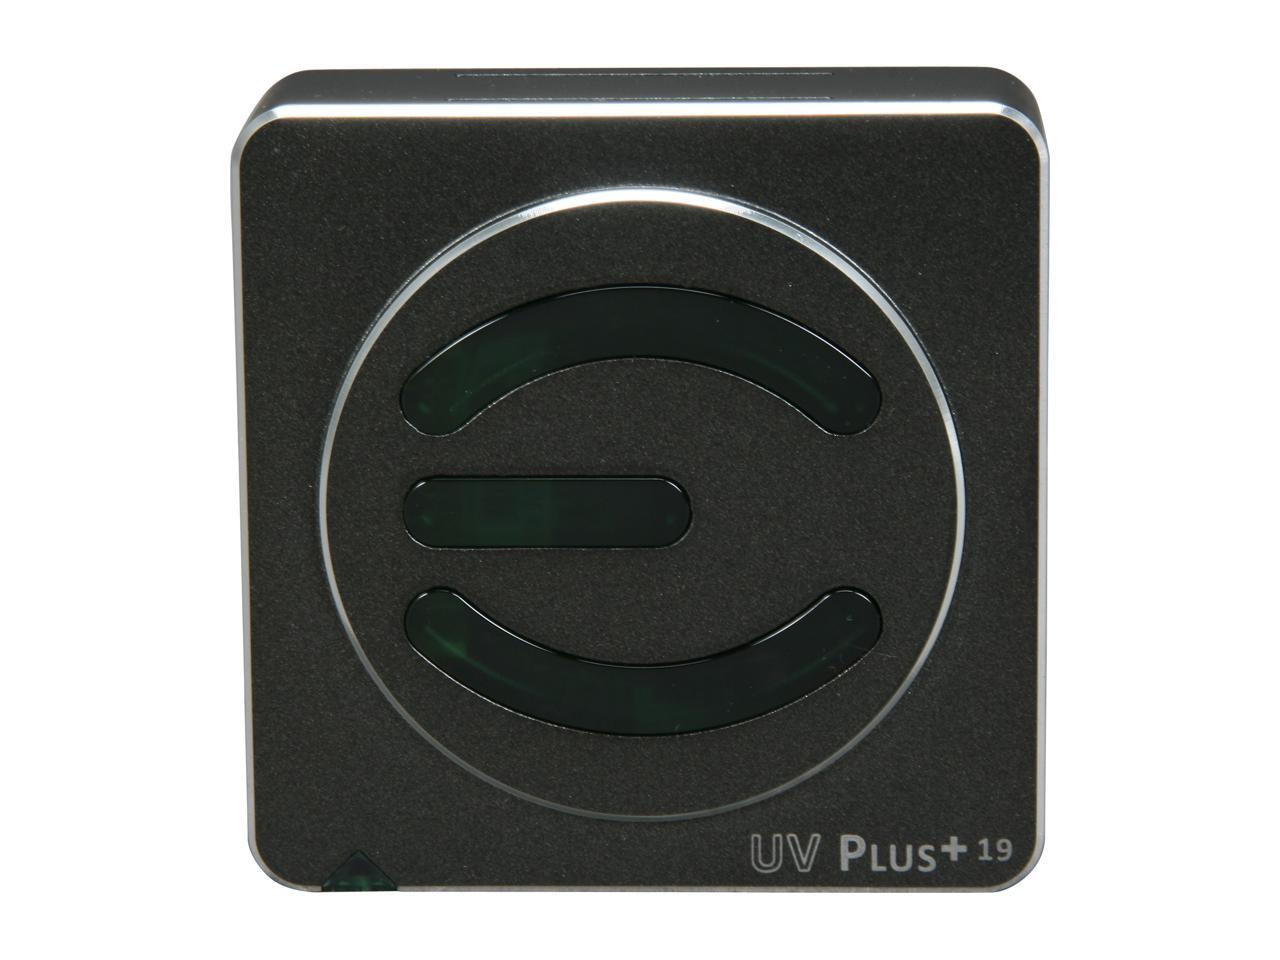 eVGA 100-U2-UV19-TR UV Plus+ 19 USB VGA Display Adapter 